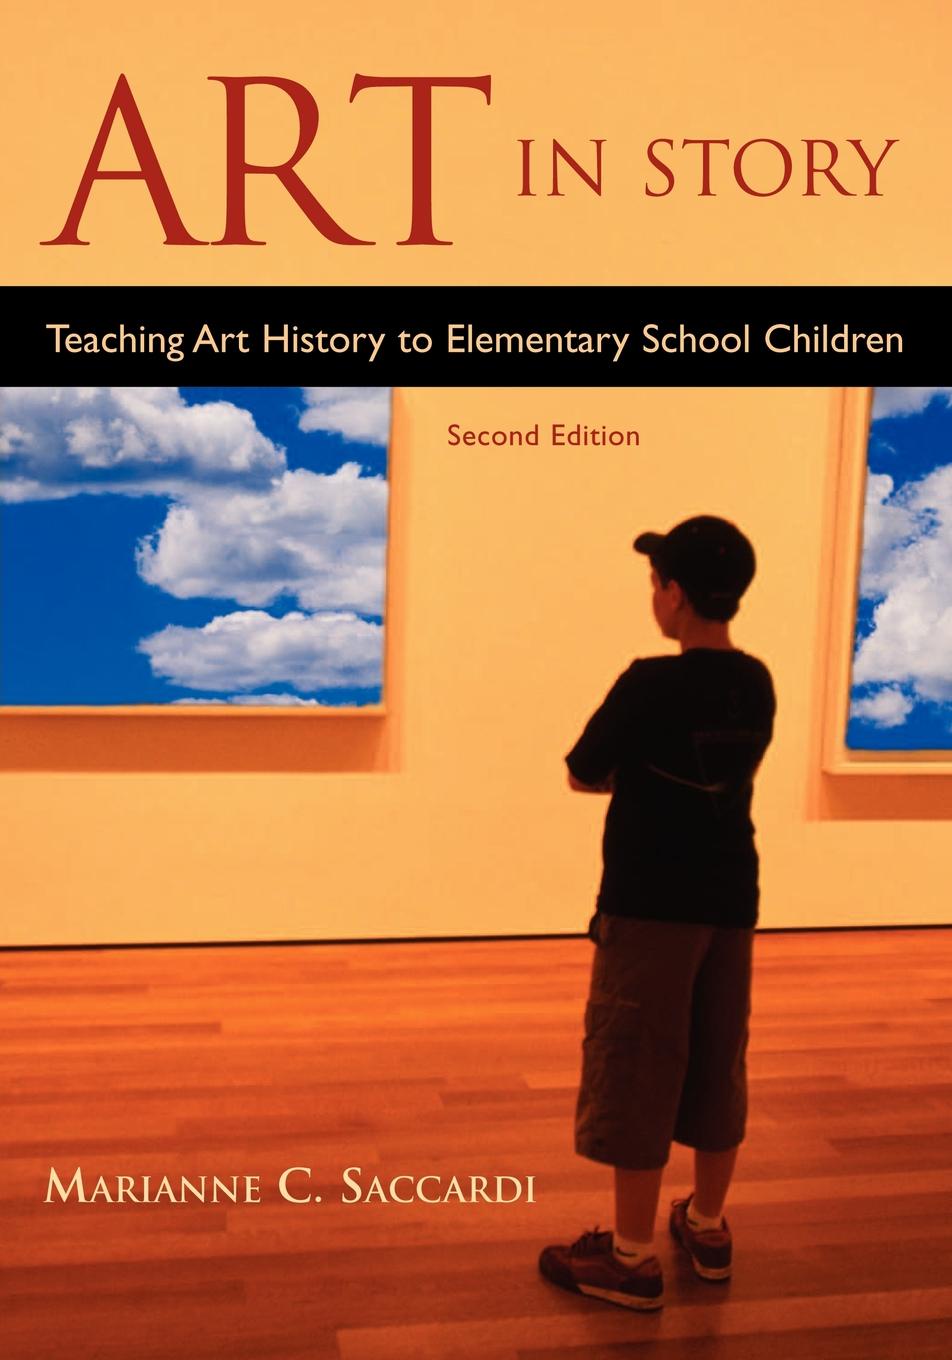 Teaching is art. History Elementary. Elementary stories. History teacher Art. Two artists teach this.